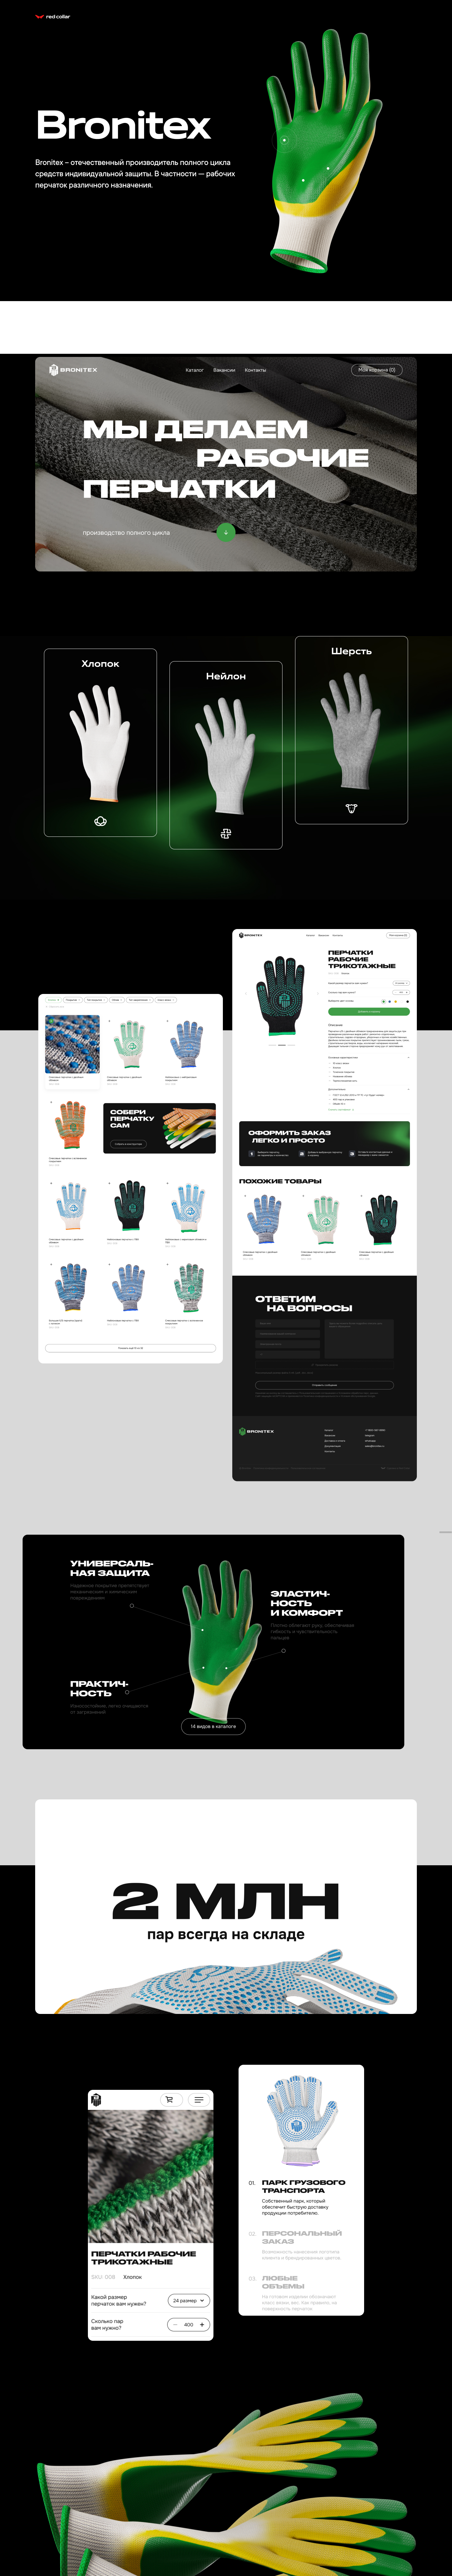 Сайт производителя перчаток Bronitex